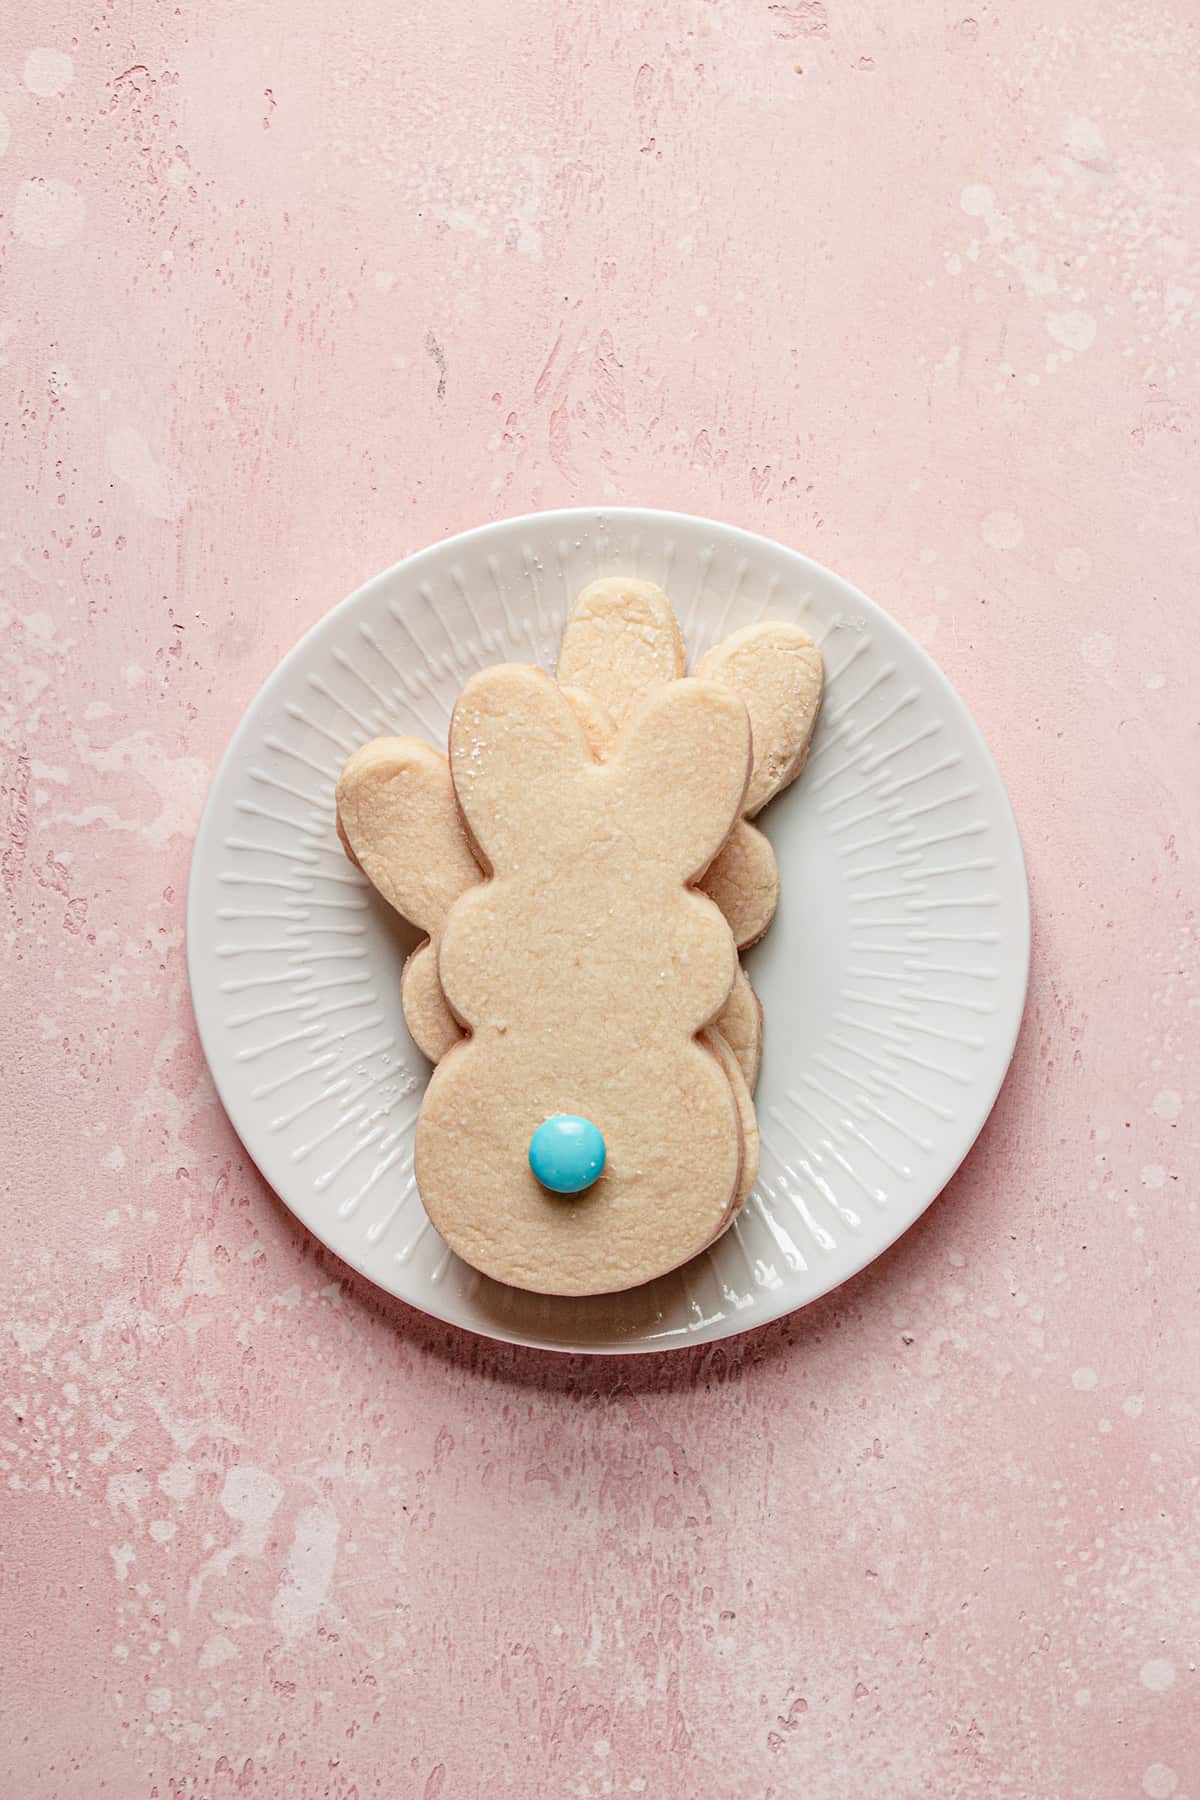 Easter bunny shortbread cookies recipe